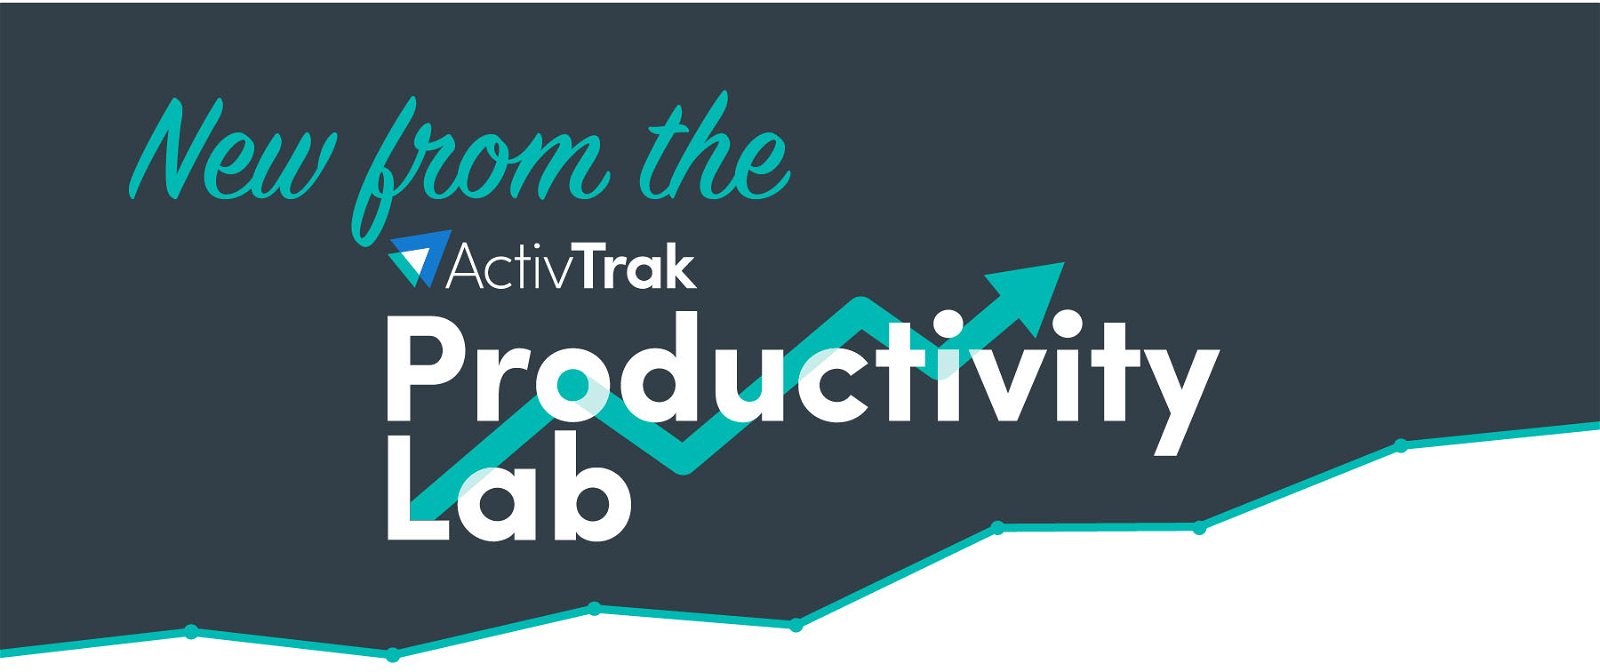 Image of the ActivTrak Productivity Lab logo with the text: New from the Productivity Lab" and an upward facing arrow